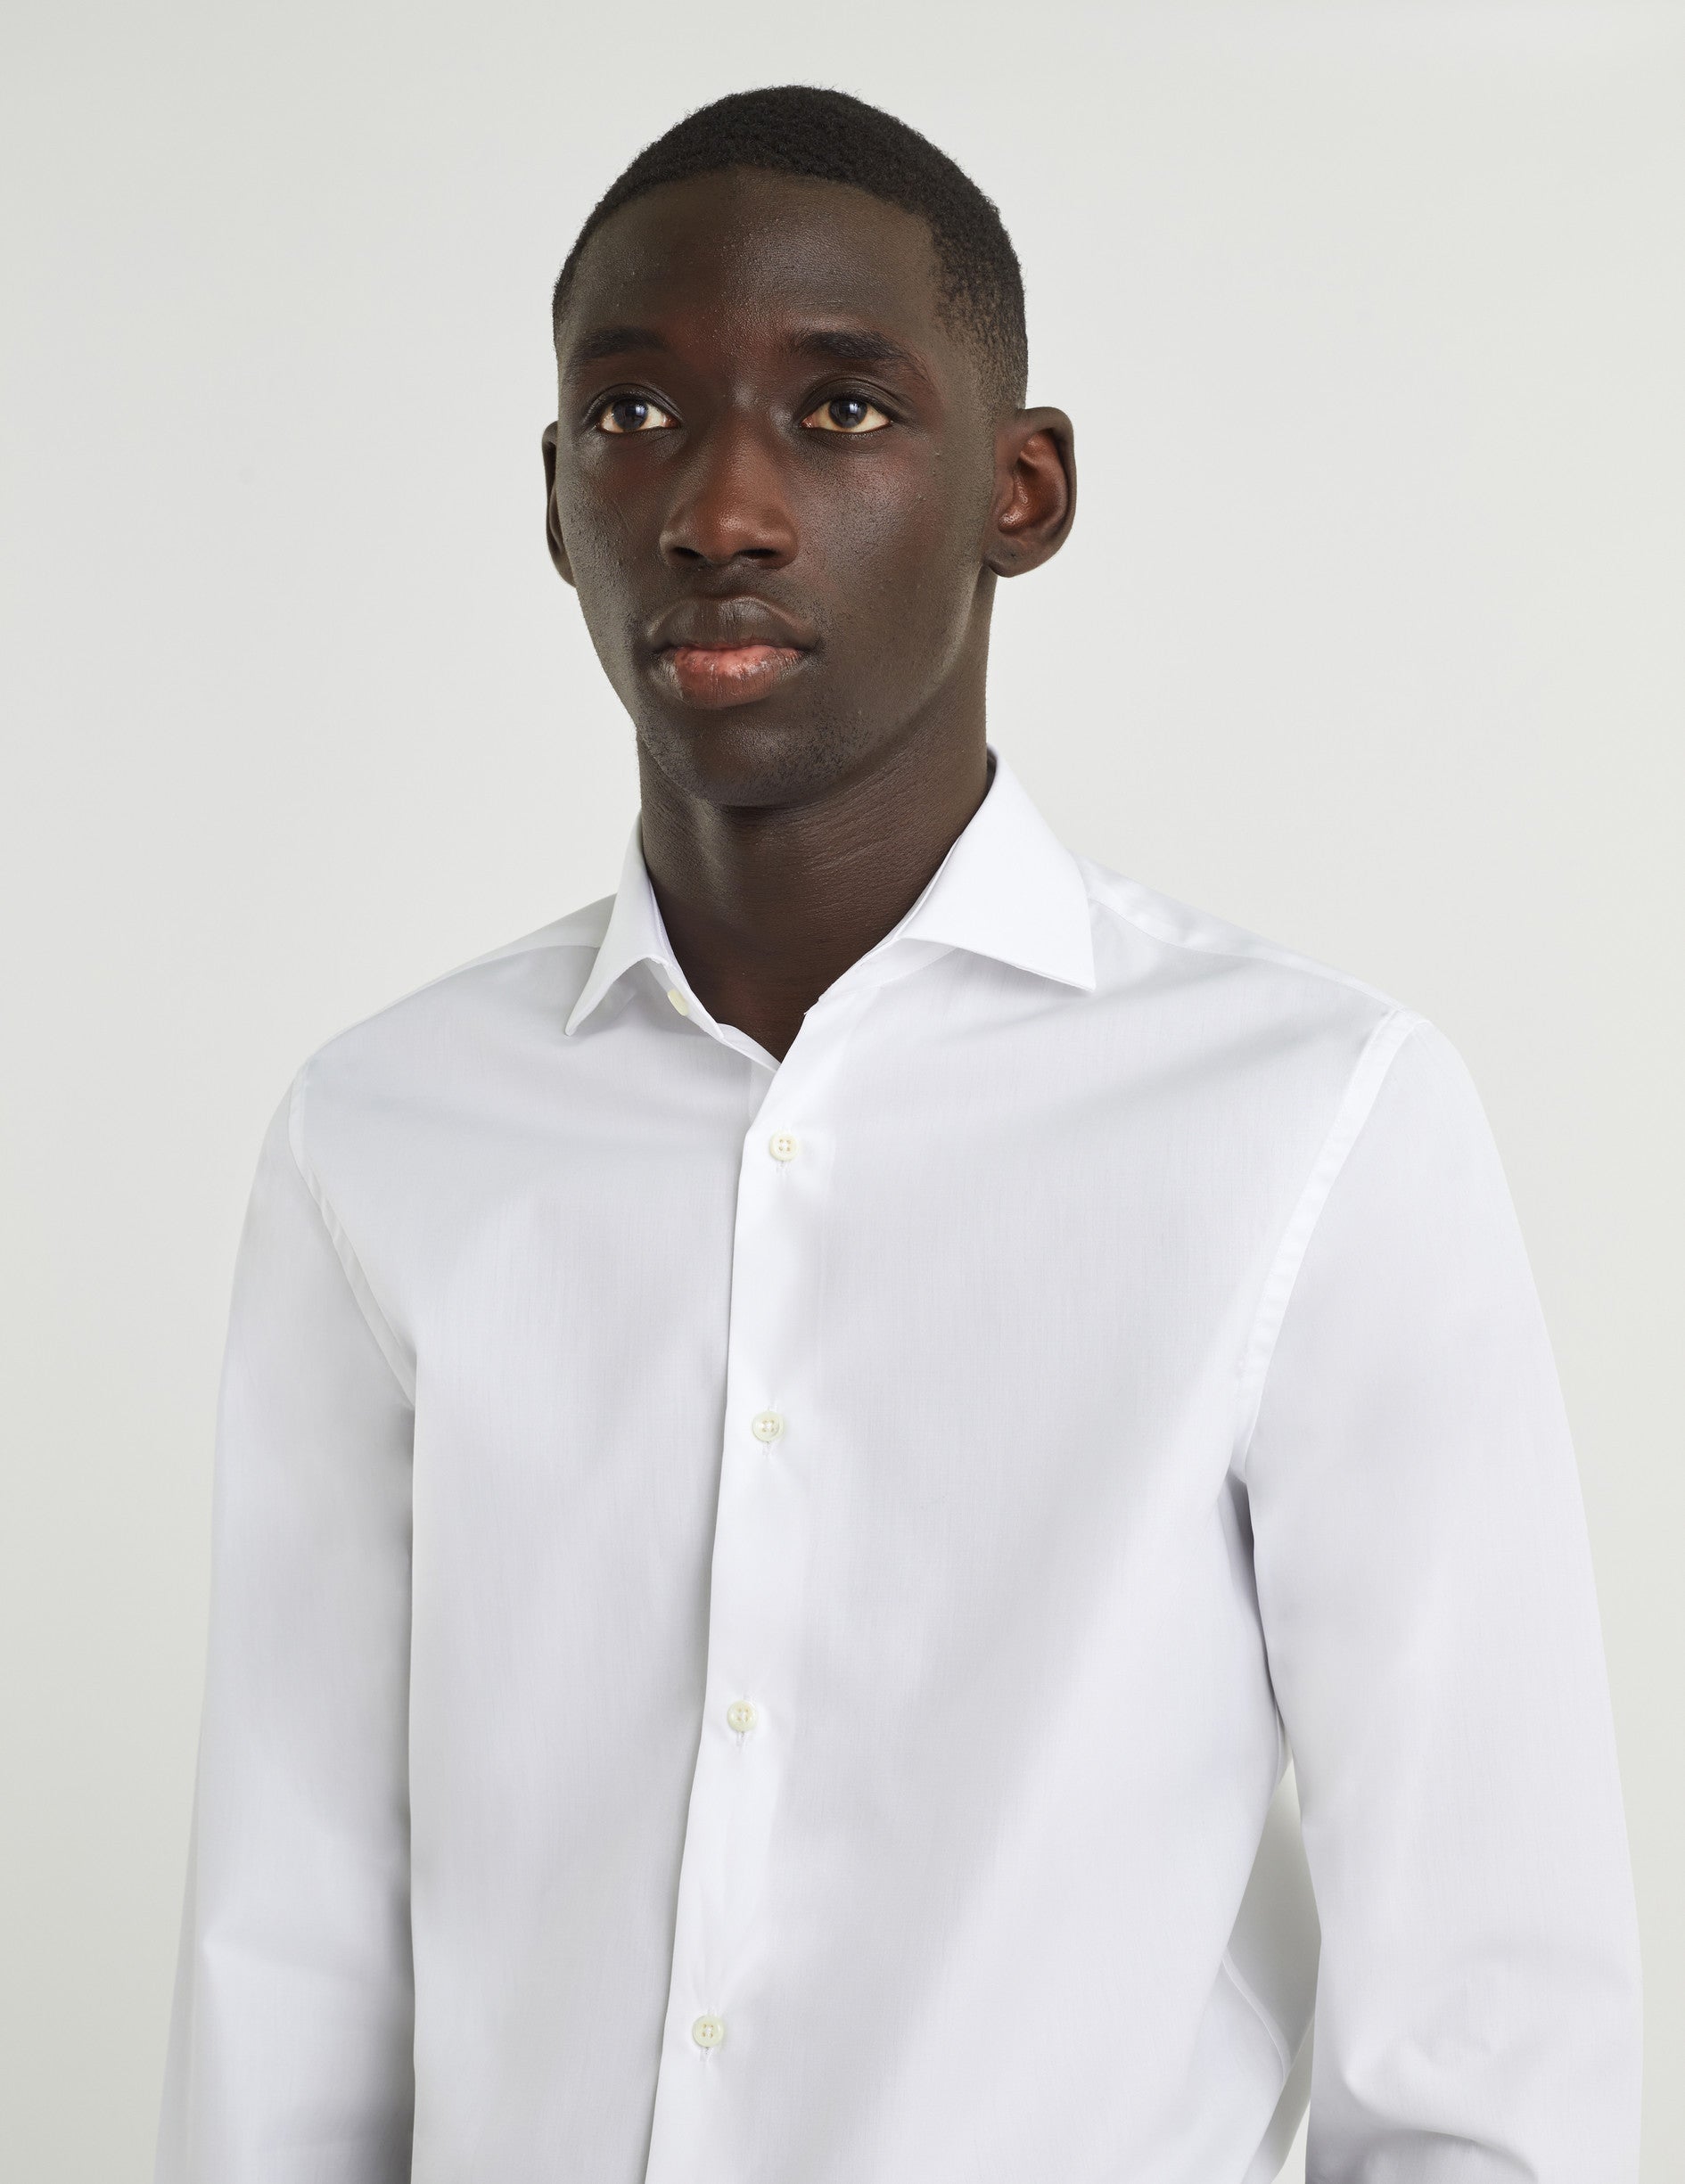 Fitted white shirt - Poplin - Italian Collar - French Cuffs